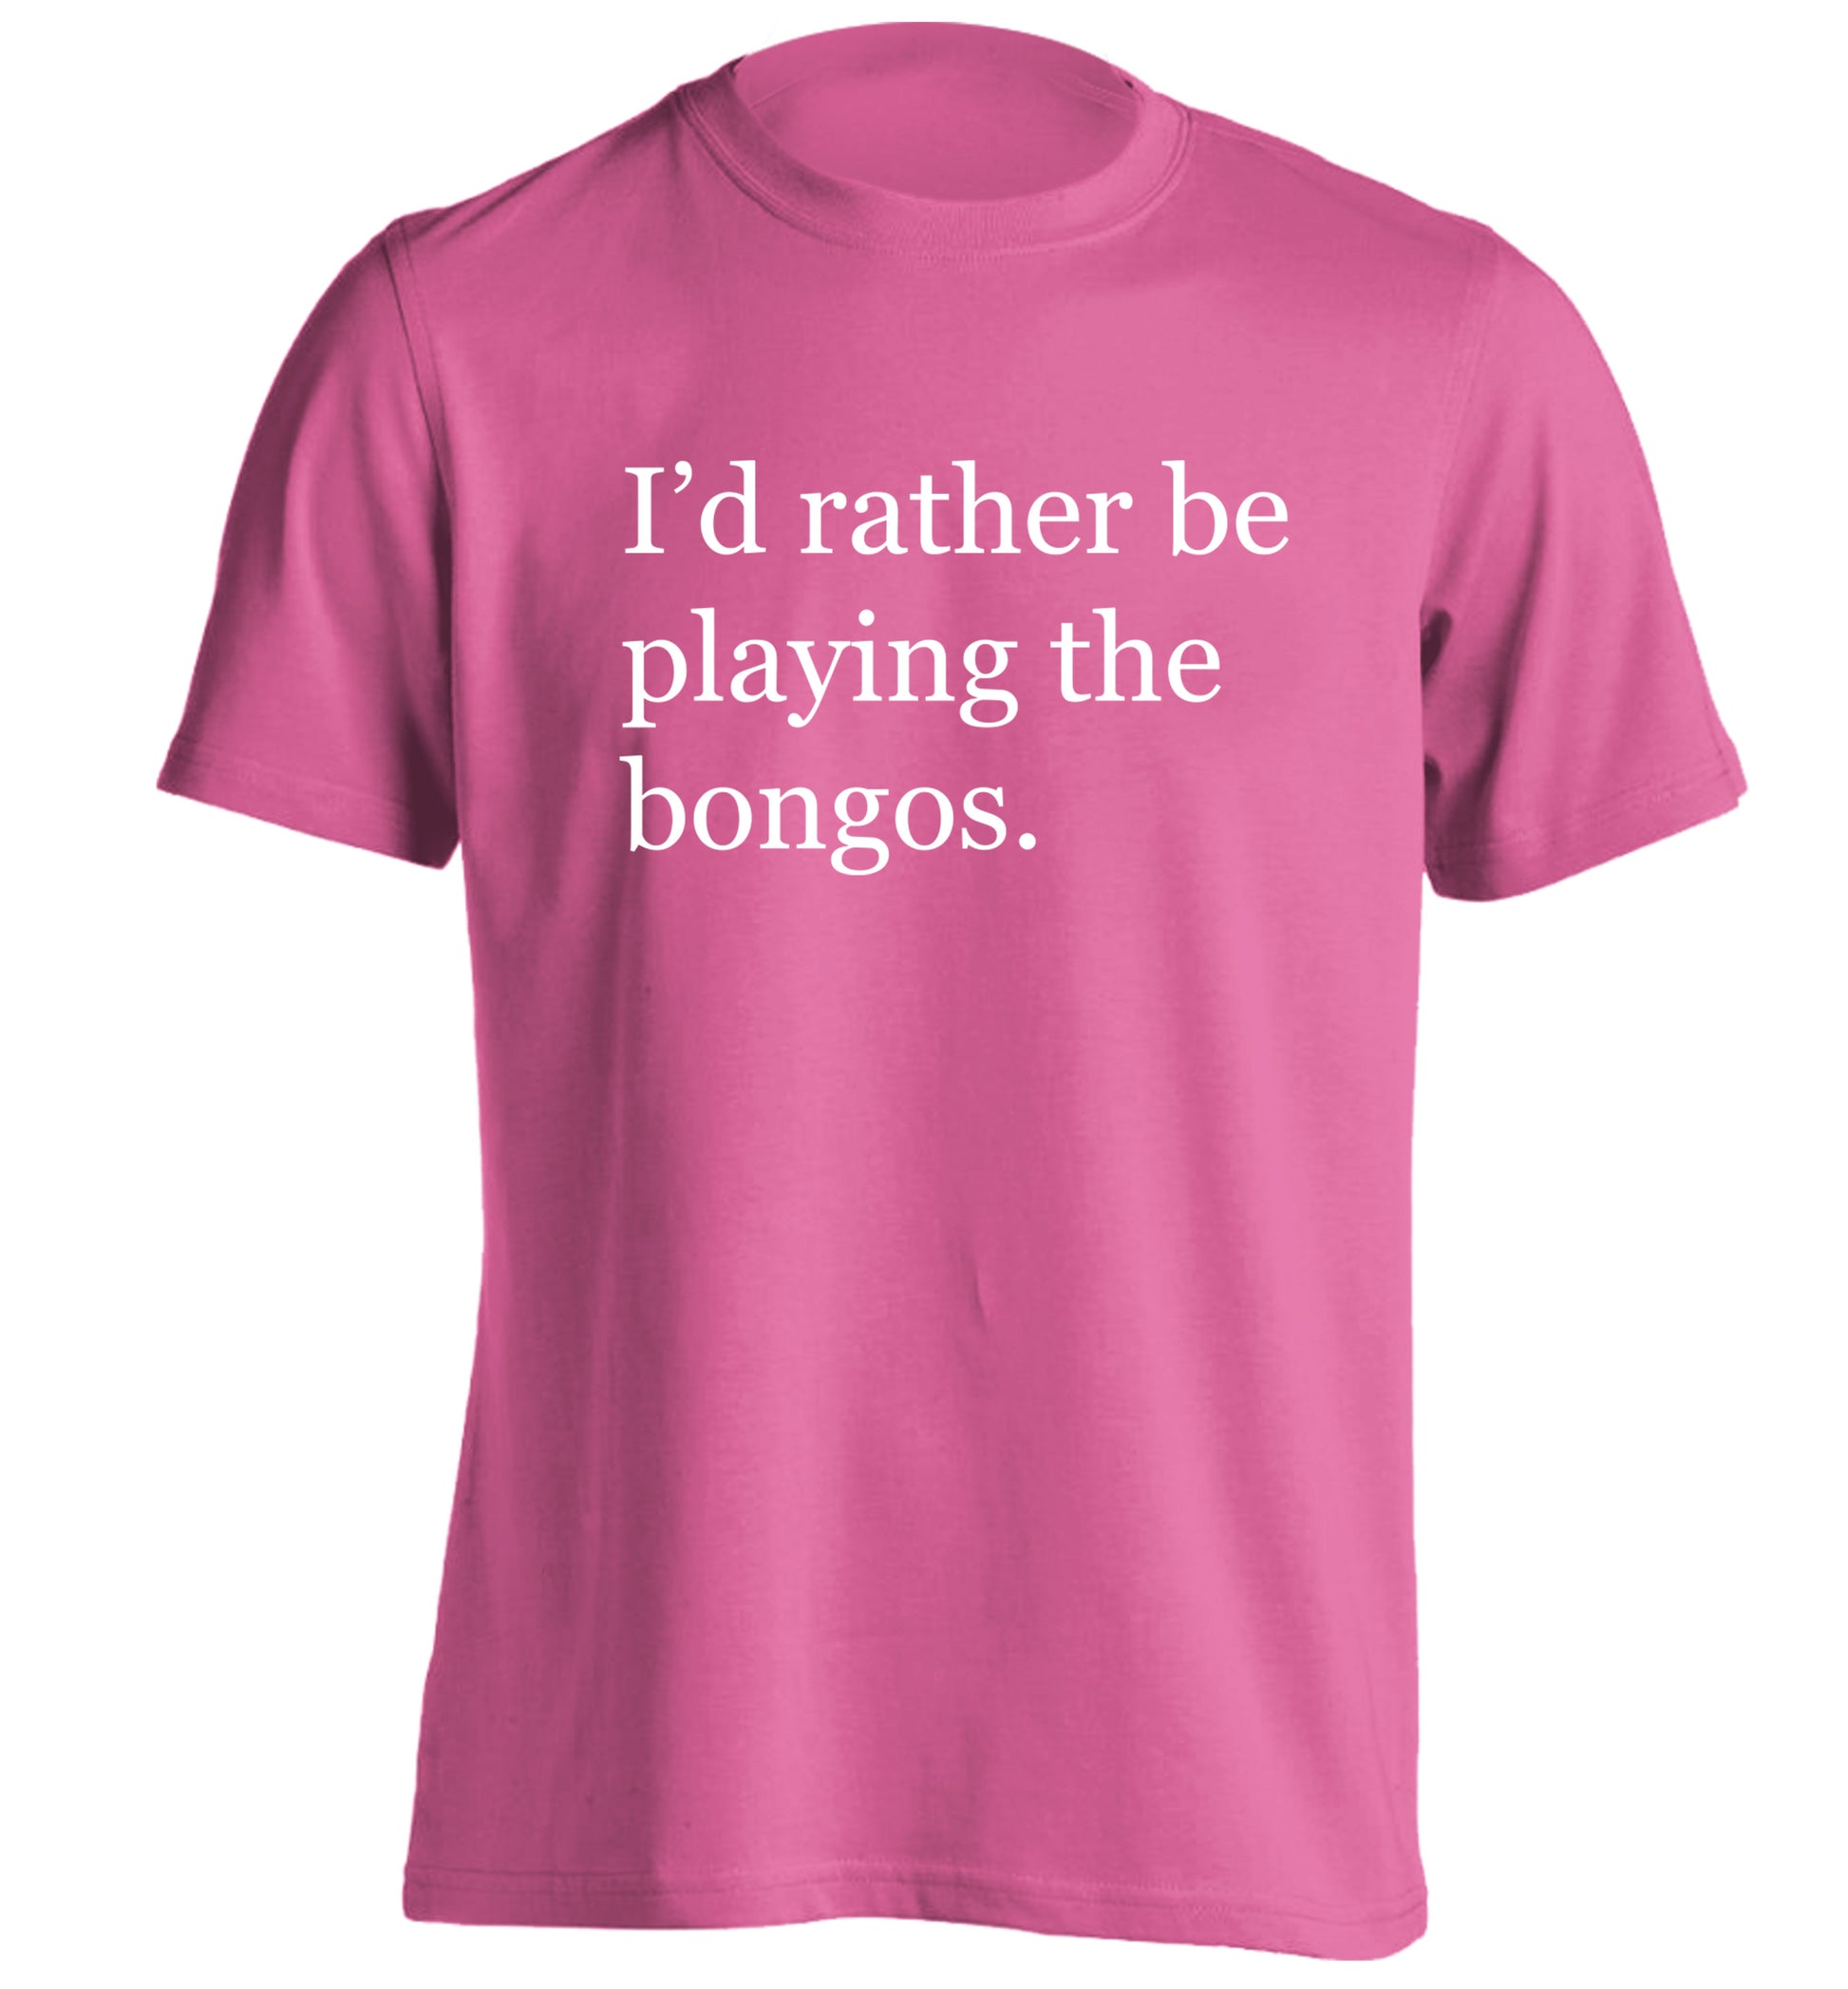 I'd rather be playing the bongos adults unisexpink Tshirt 2XL